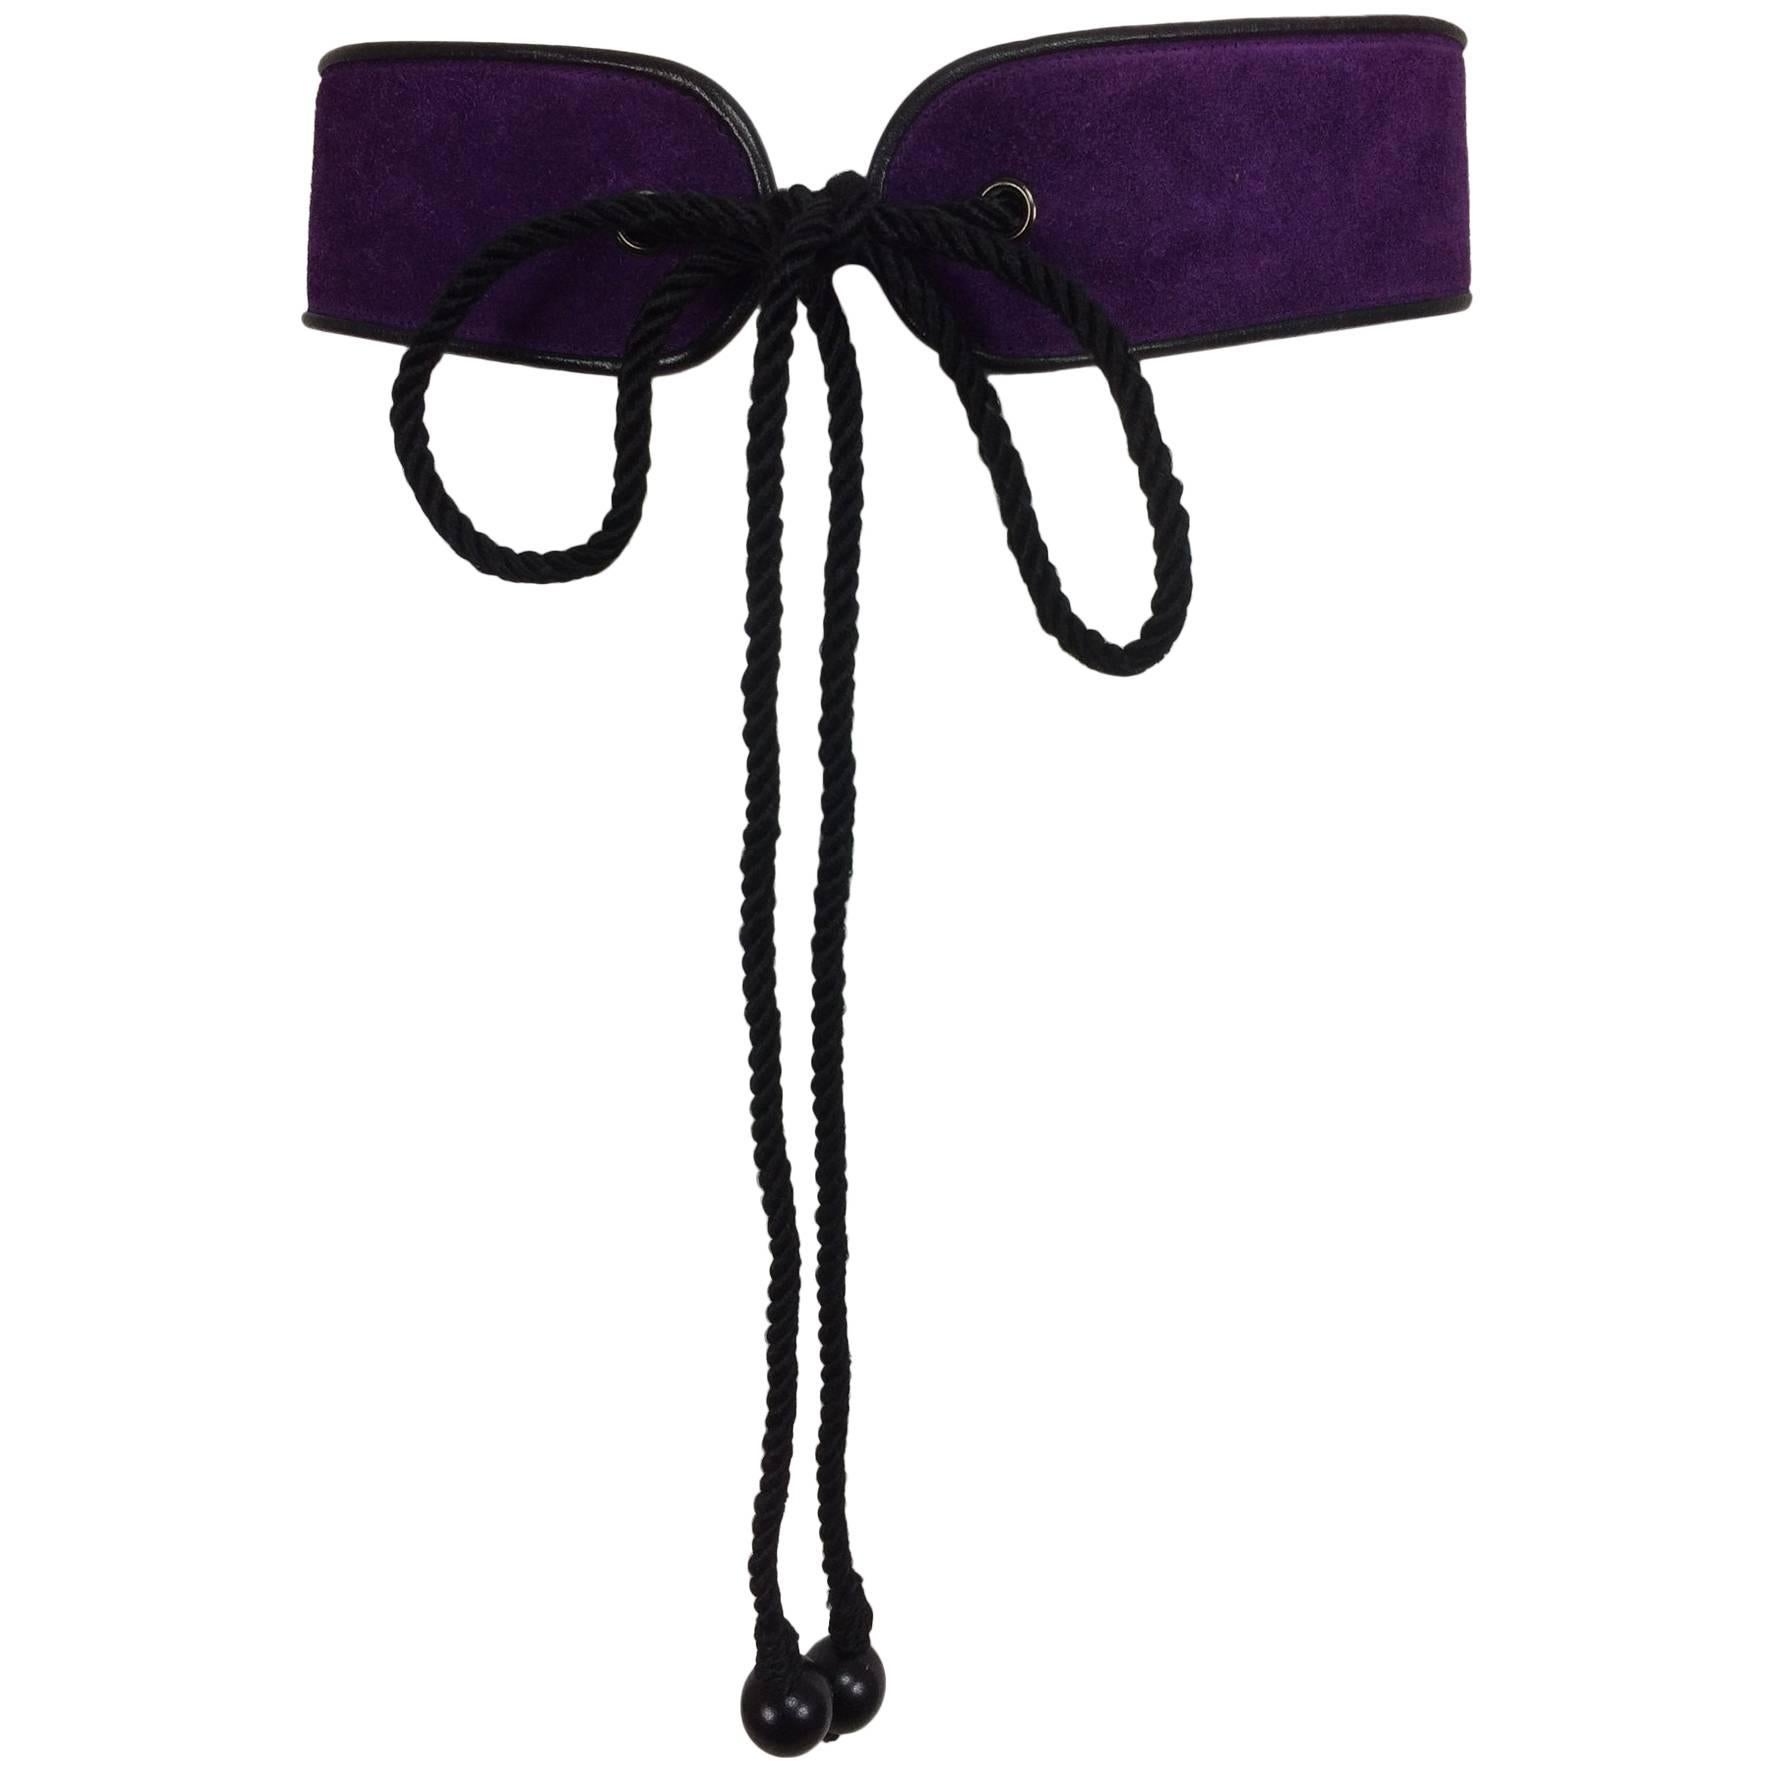 Vintage Yves Saint Laurent purple suede & leather cord tie belt 1960s